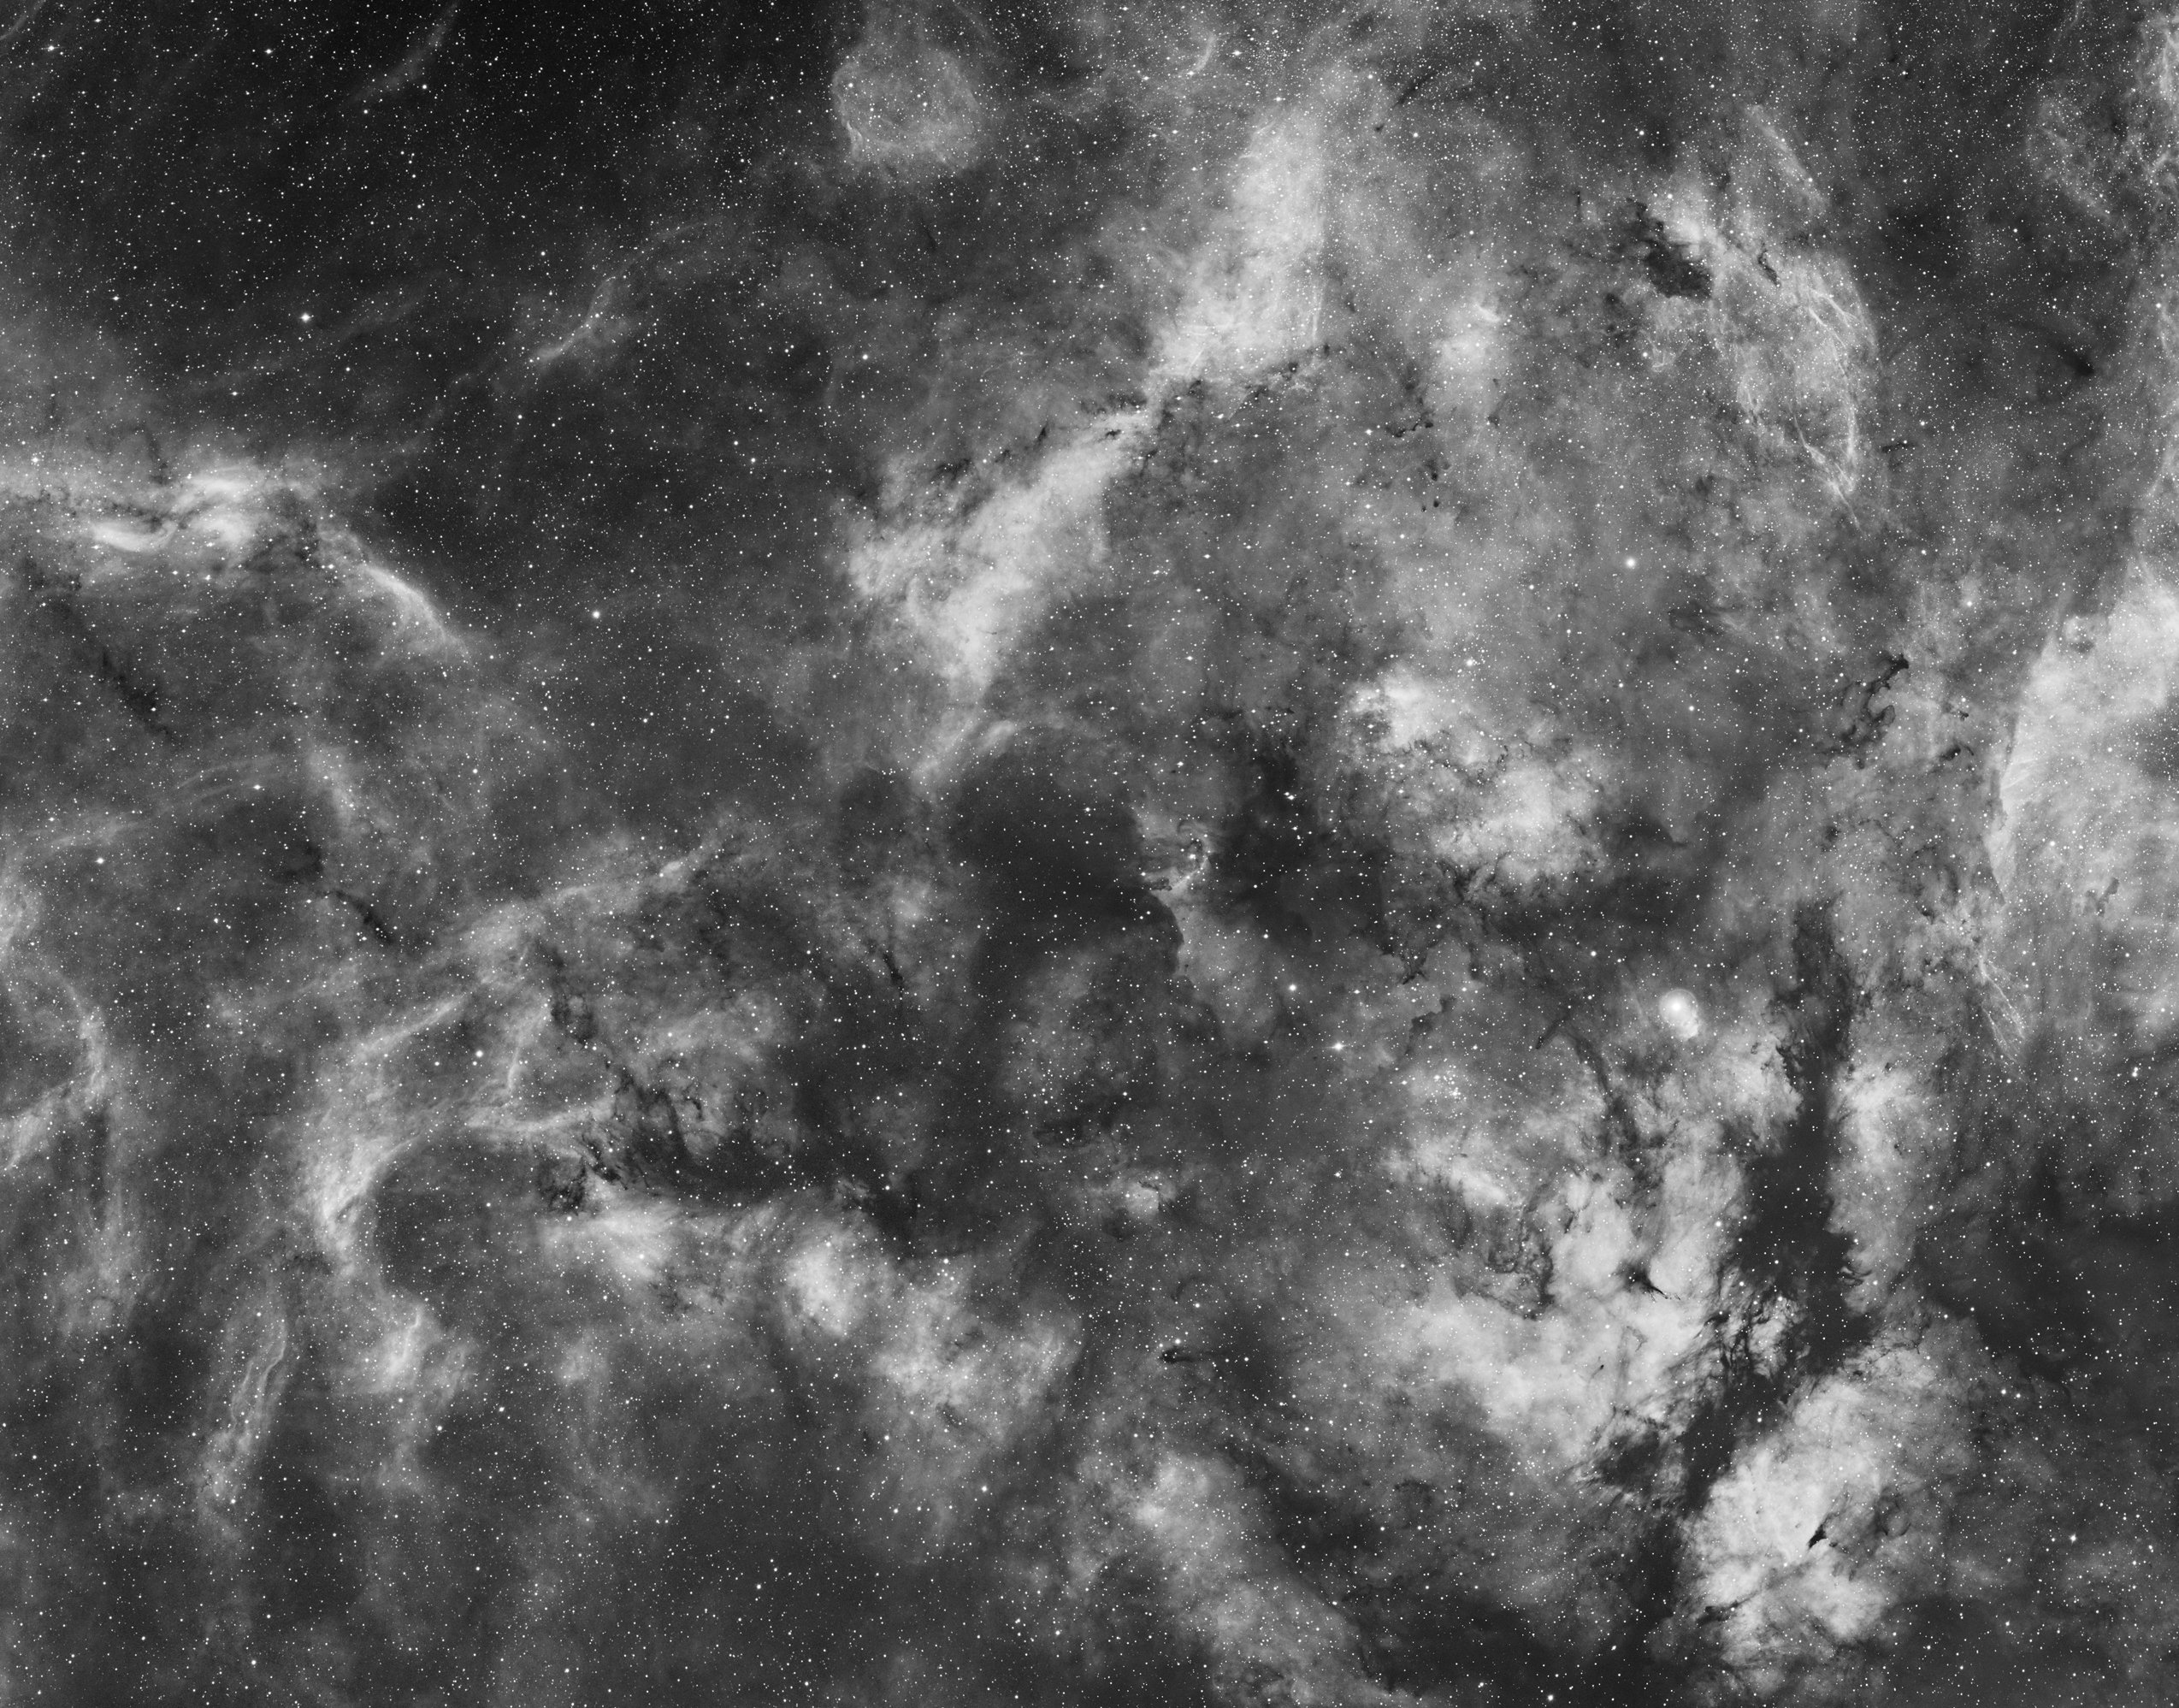 Cygnus starfield